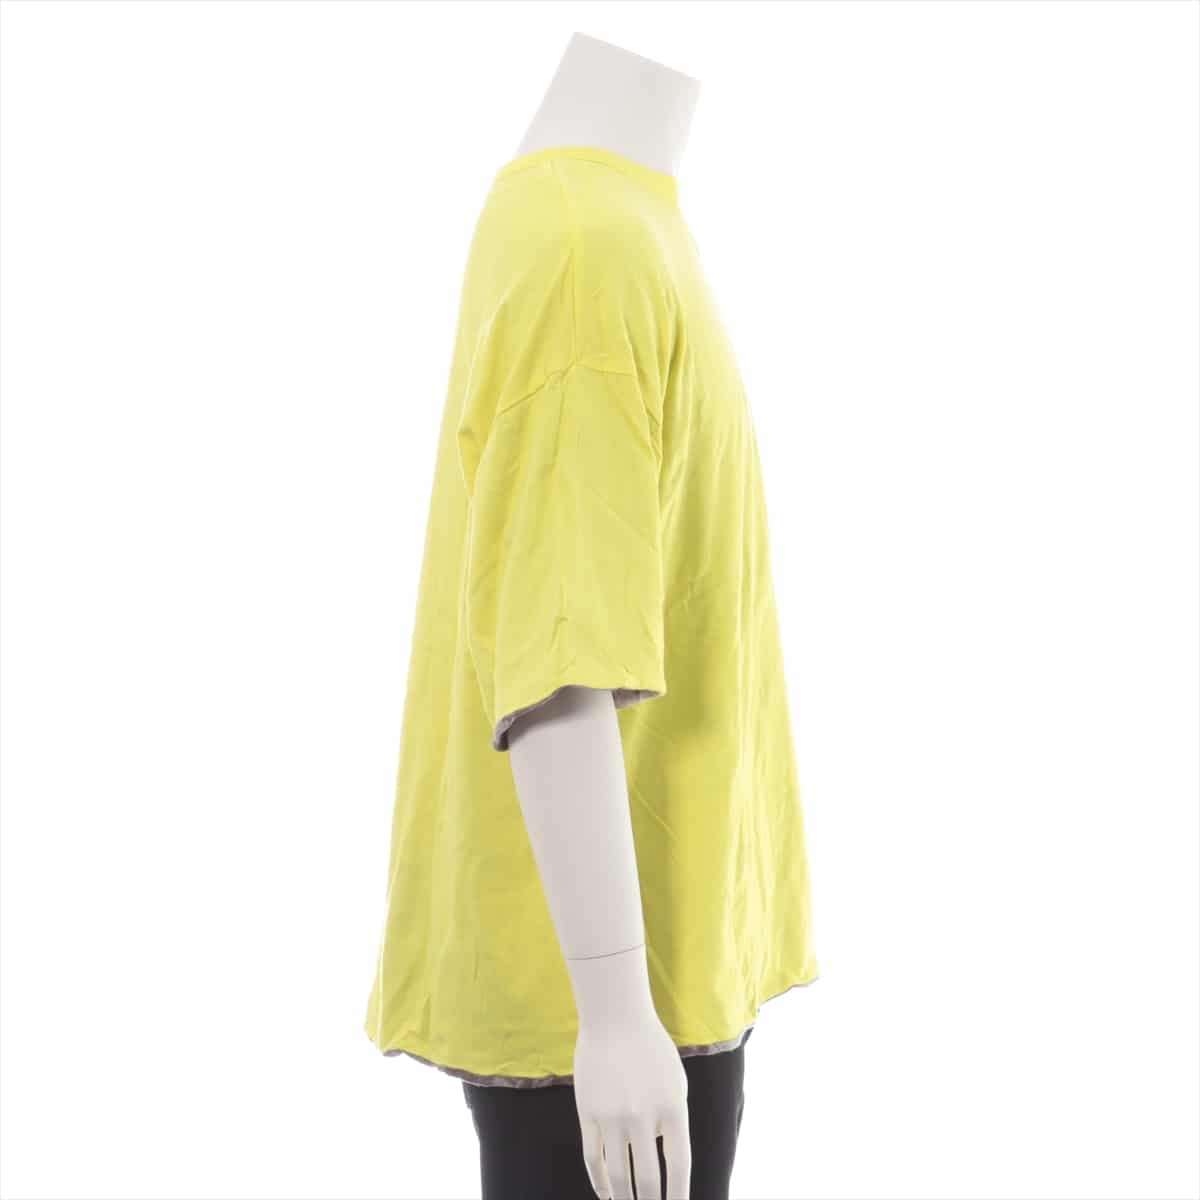 Windansea 20 years Cotton T-shirt Unknown size Men's Yellow  Logo Tie-dye Reversible